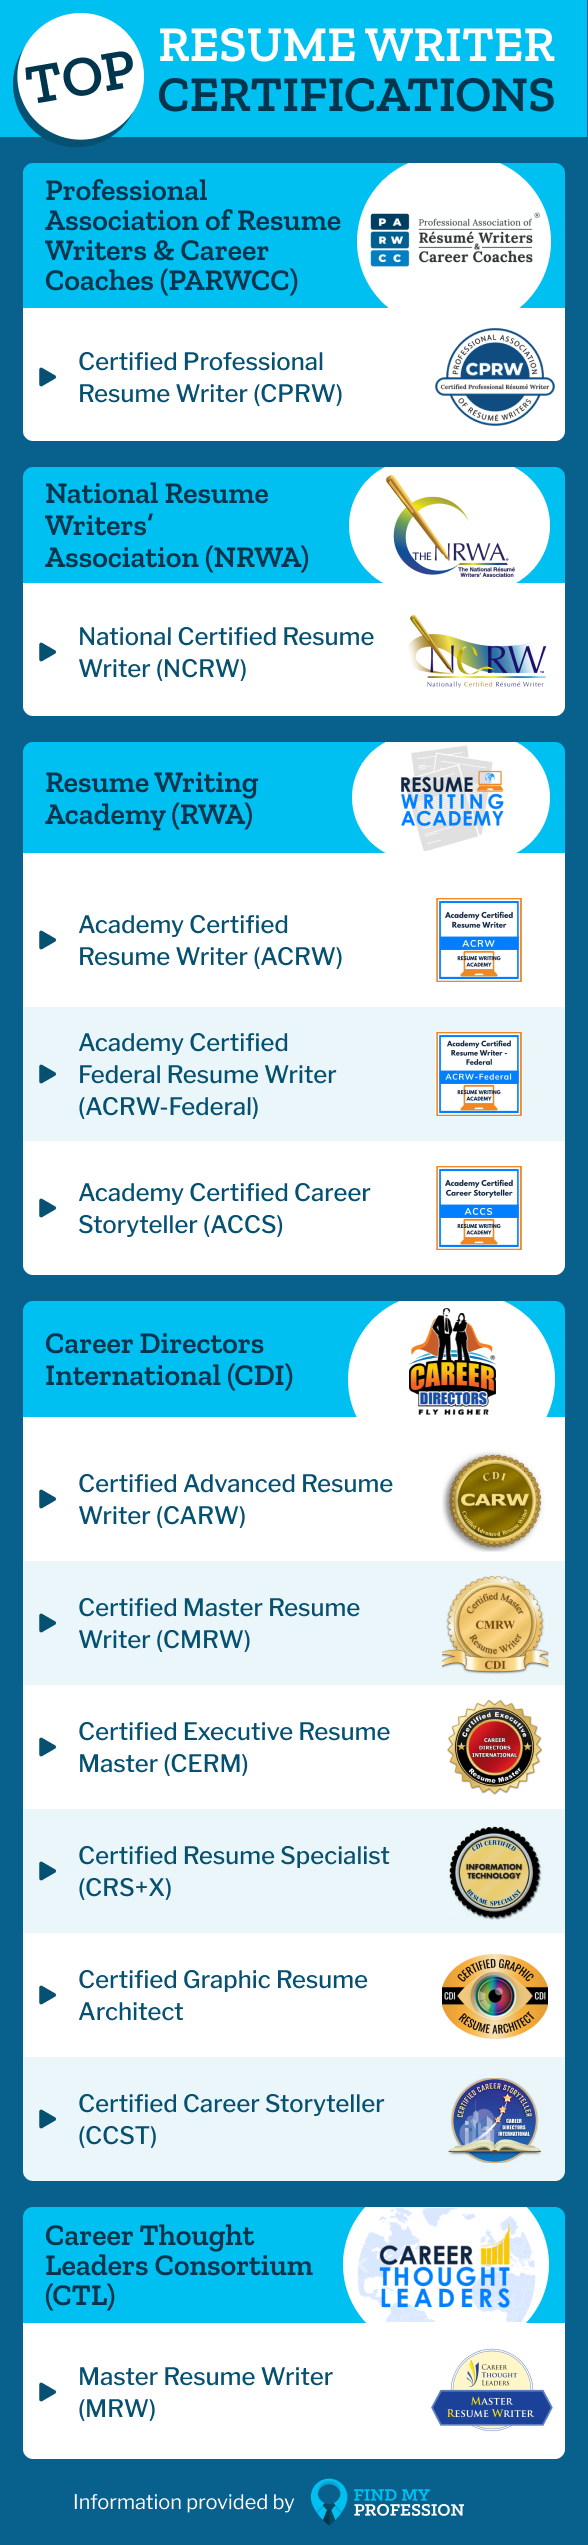 resume writing certification